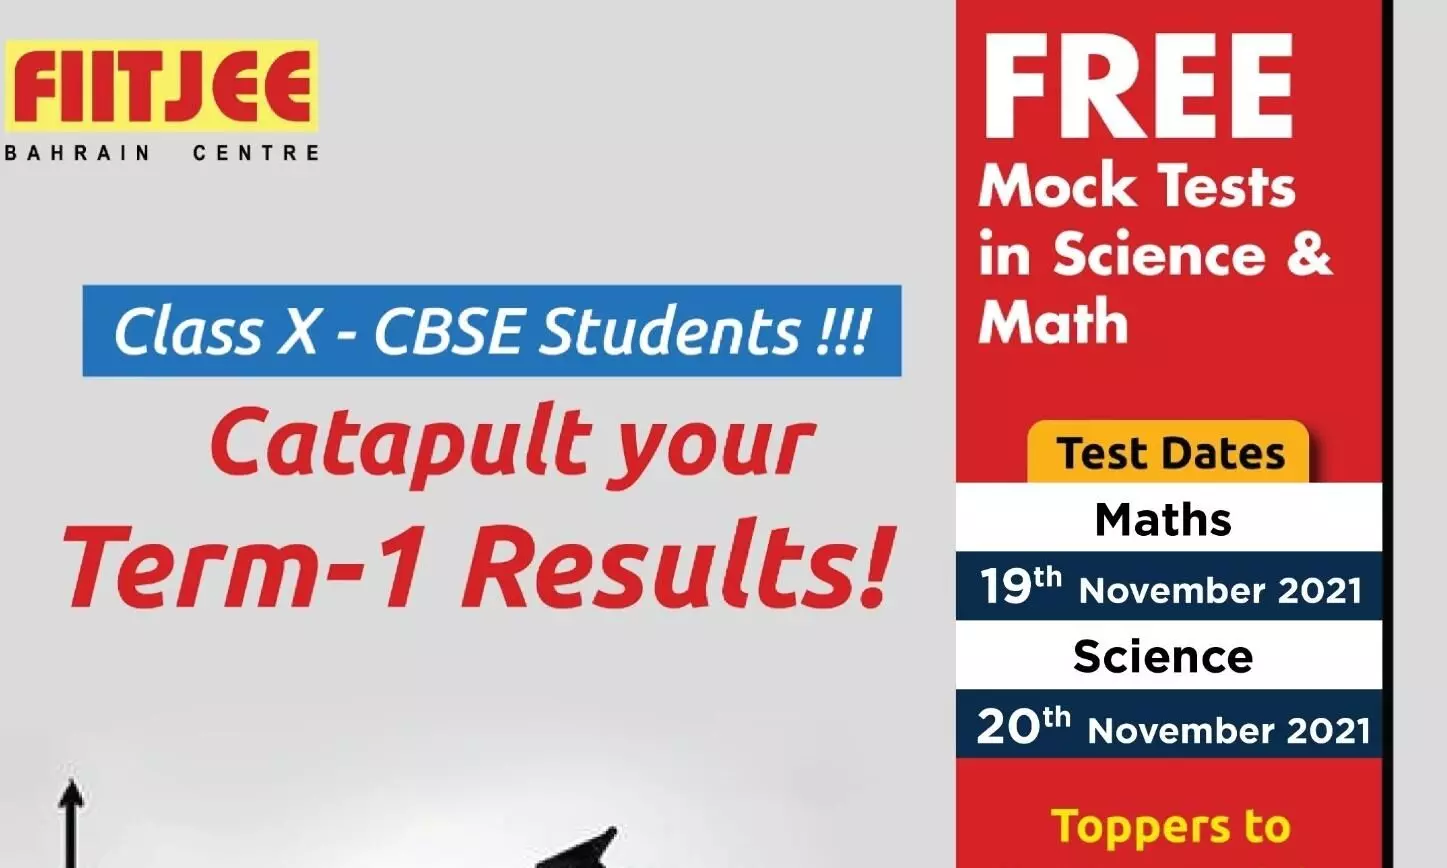 FIITJEE Bahrain announces Free Mock Test for Class-X CBSE students in Bahrain